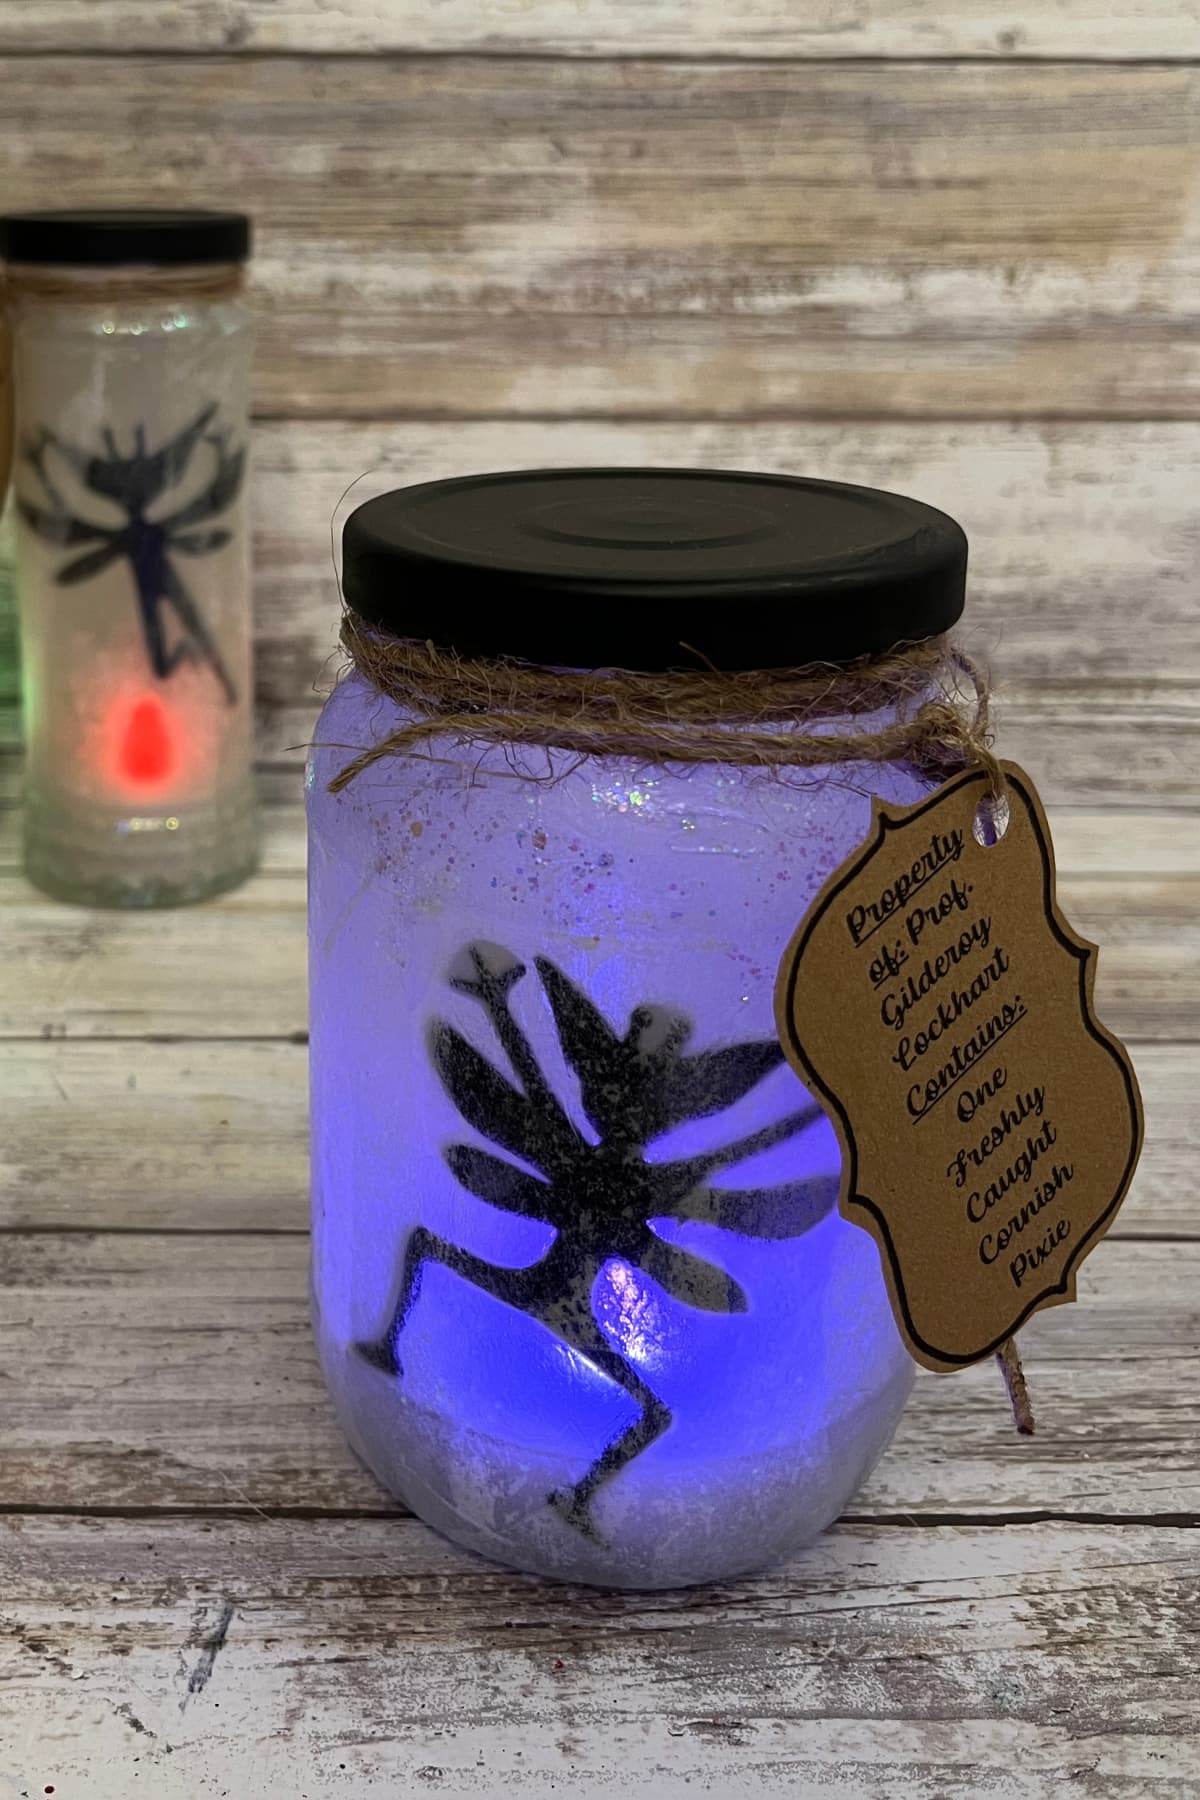 Cornish pixie jar with purple light